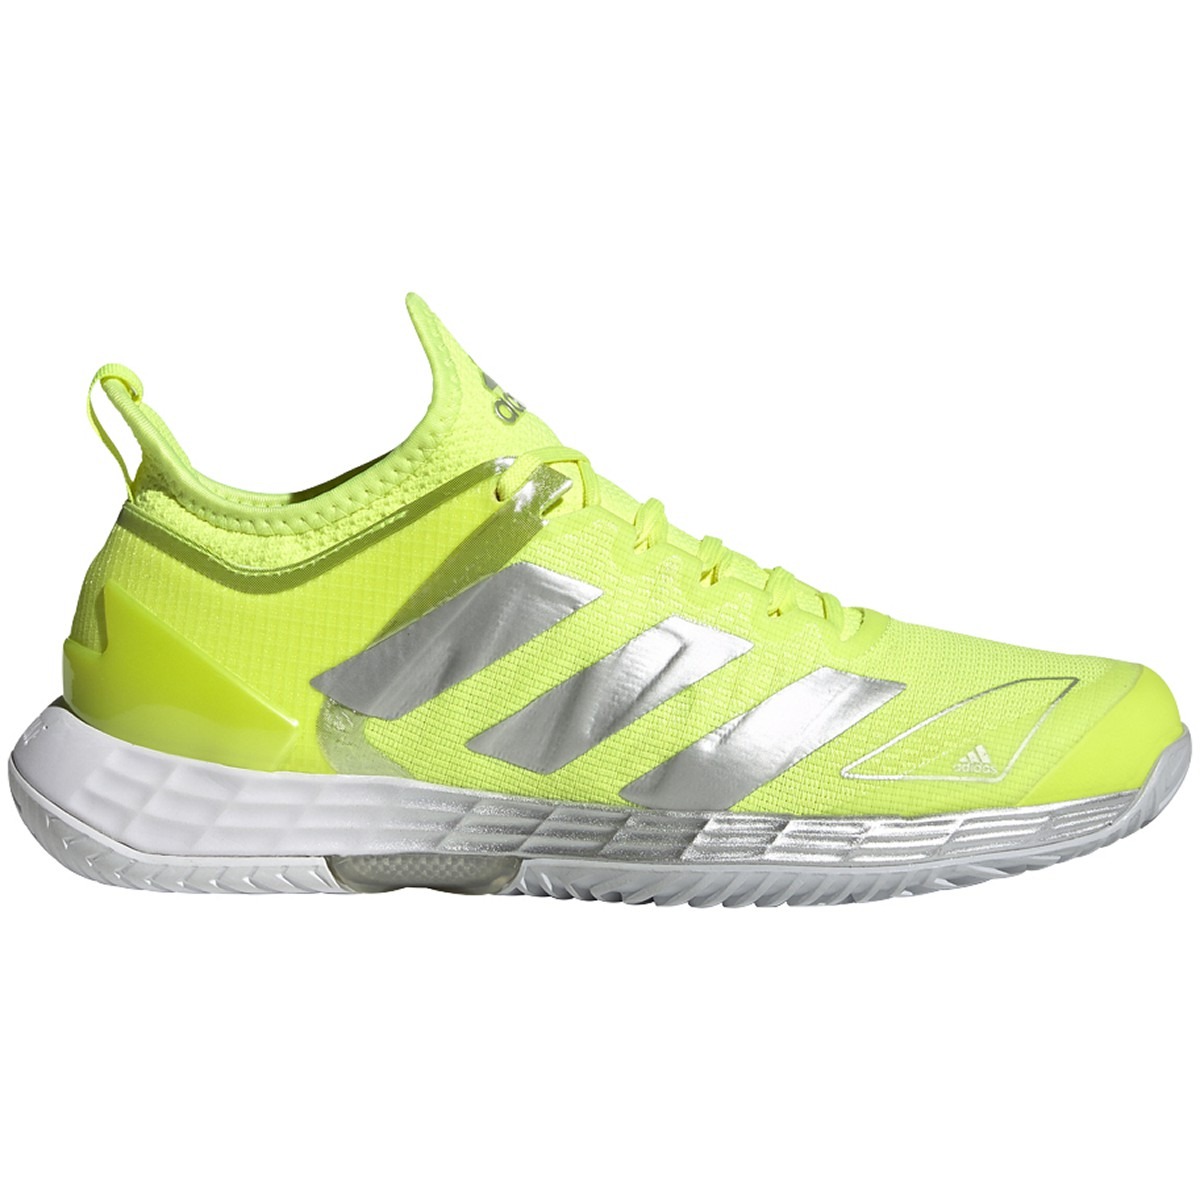 Buy Adidas Women's Instinct Hi Sneaker,White/Yellow/Lime,11 M at Amazon.in